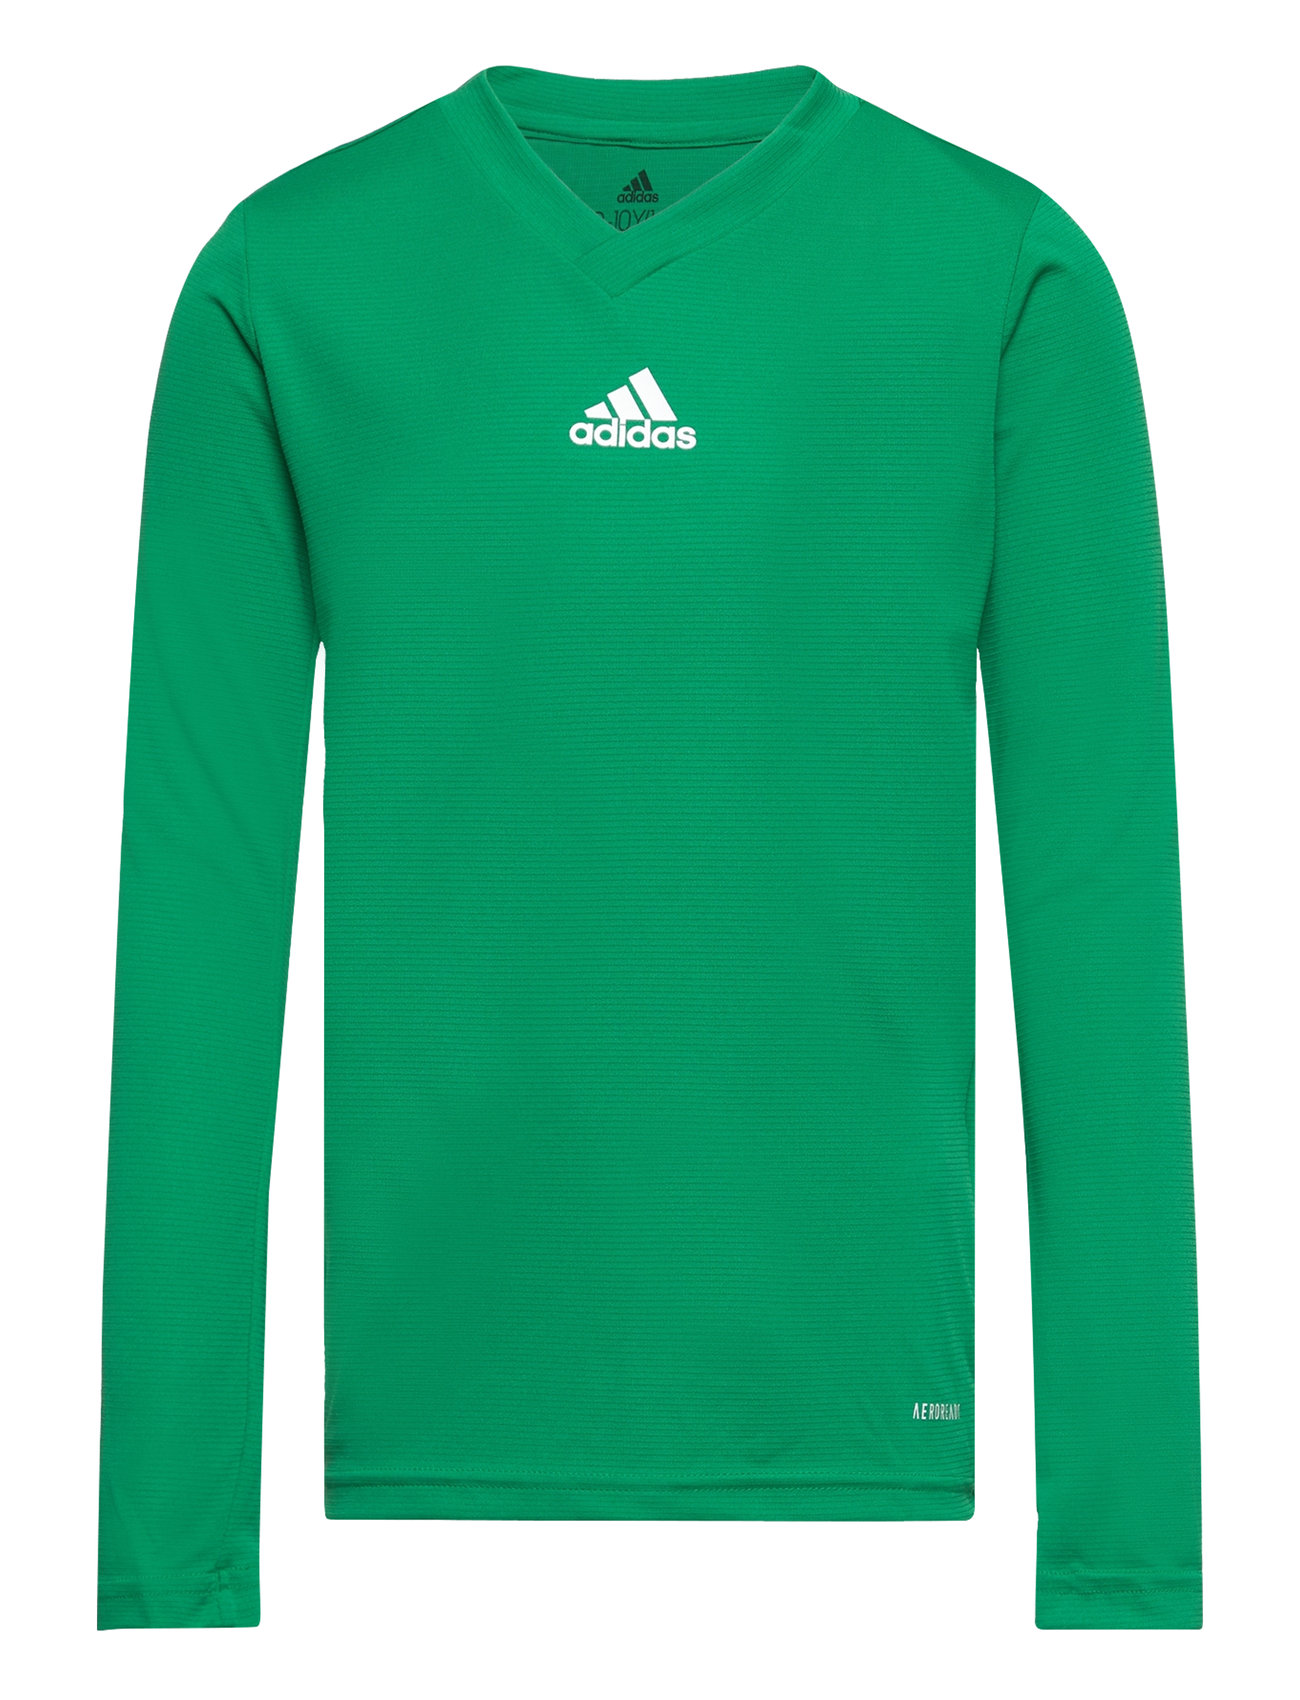 Team Base Youth Tee Sport T-shirts Long-sleeved T-shirts Green Adidas Performance